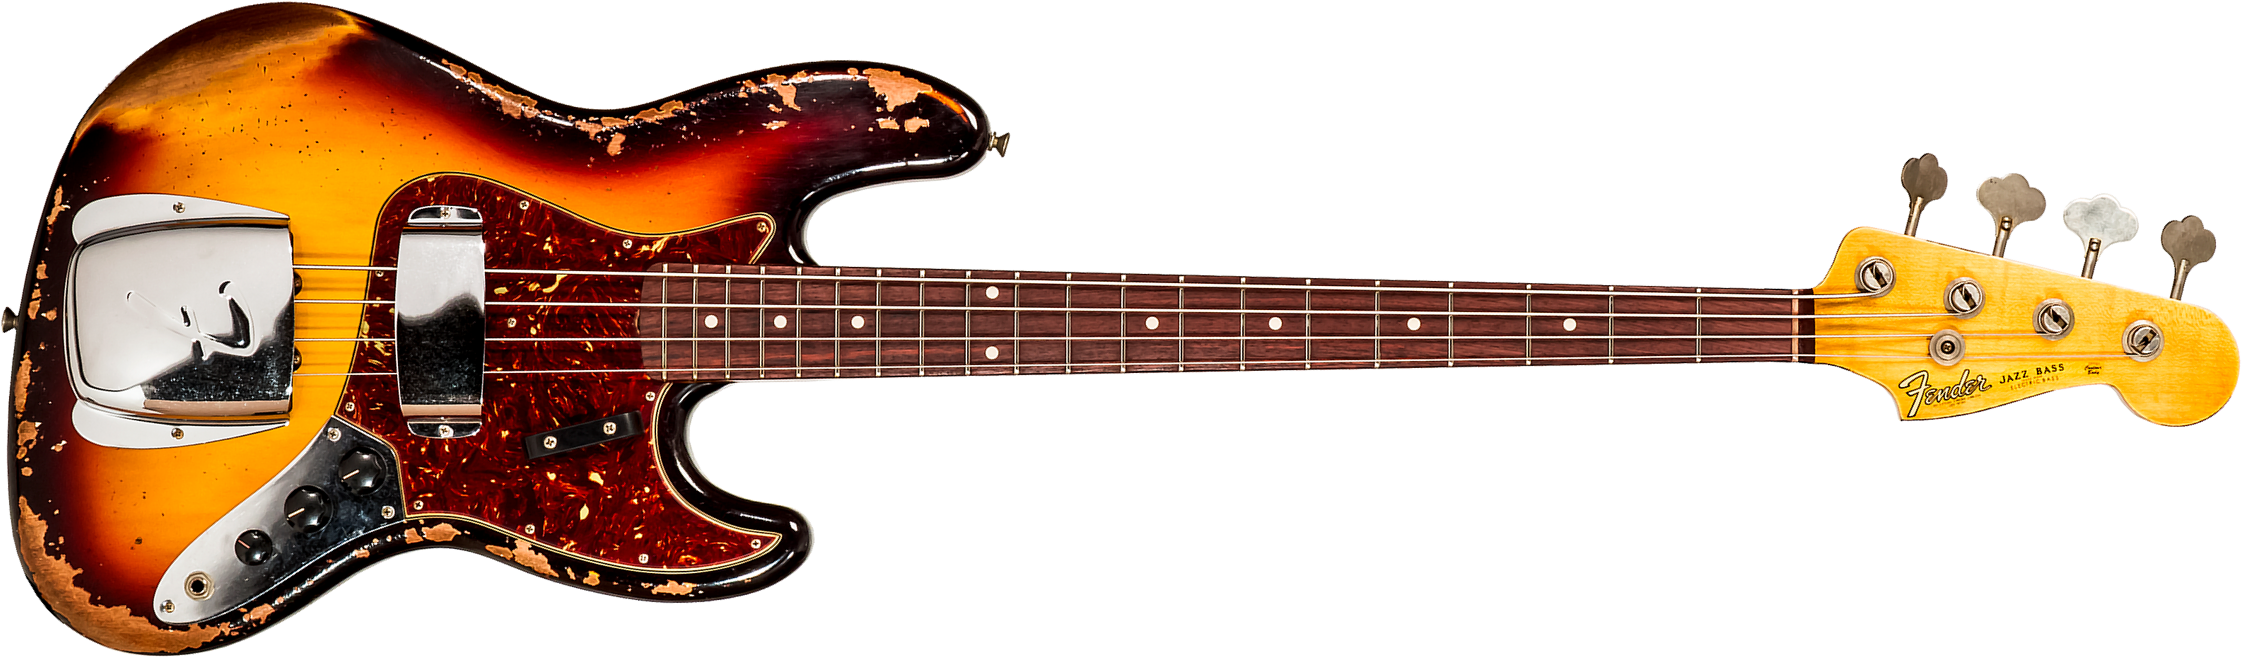 Fender Custom Shop Jazz Bass 1961 Rw #cz572155 - Heavy Relic 3-color Sunburst - Solid body electric bass - Main picture